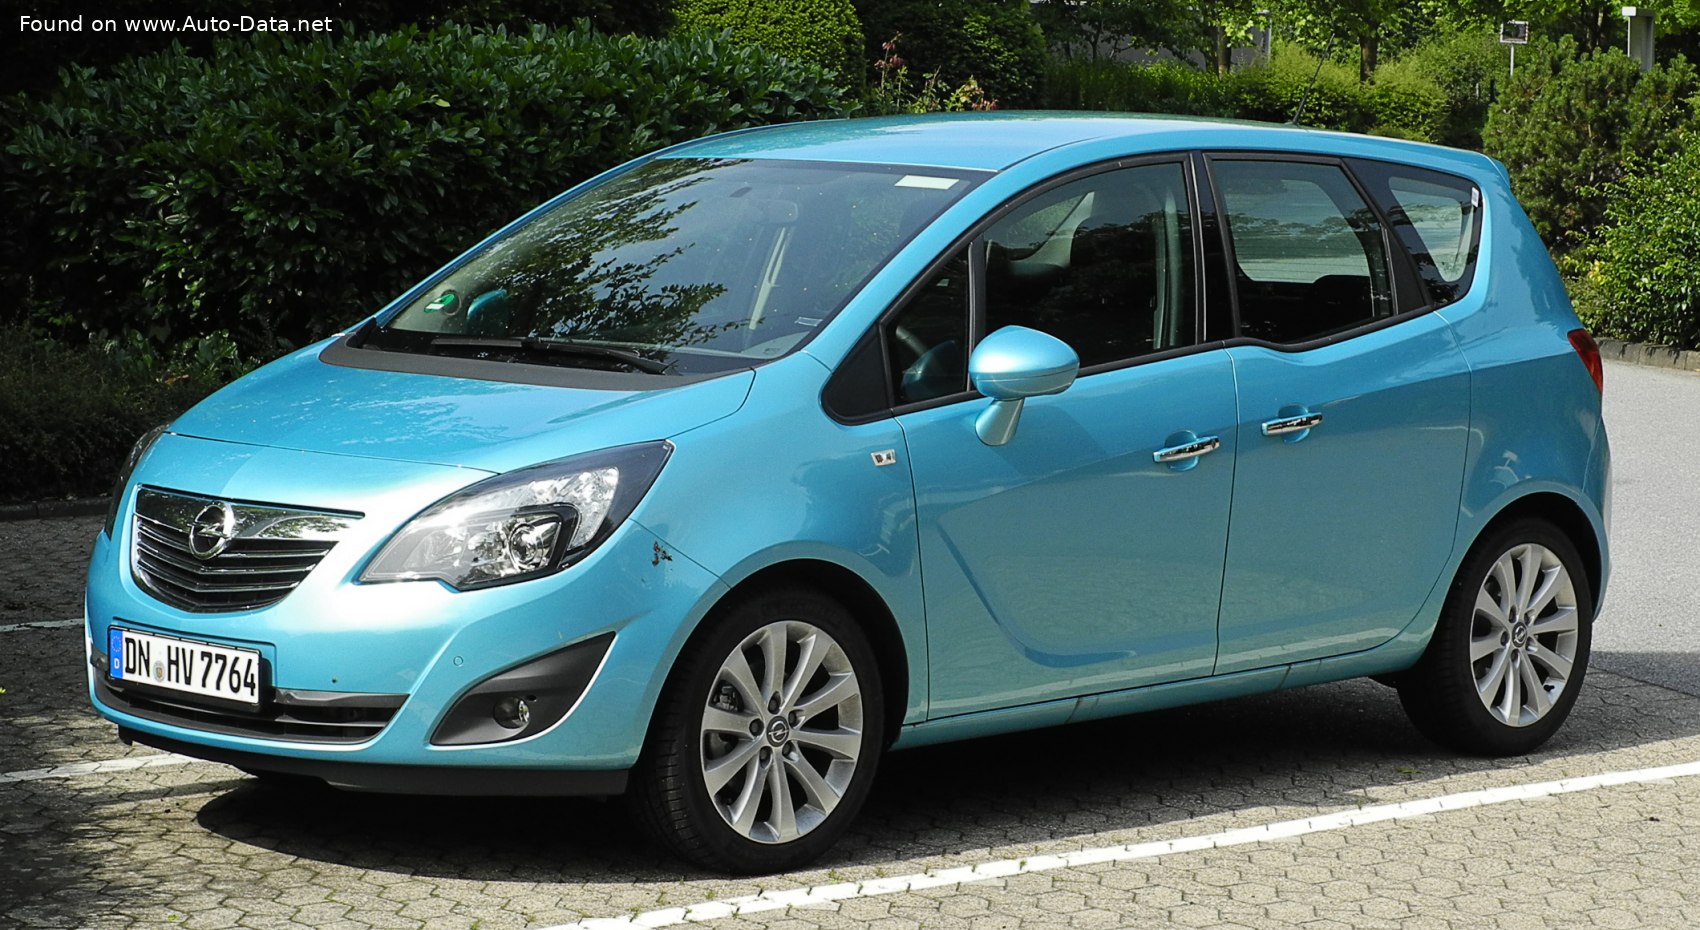 2010 Opel Meriva B 1.4 Turbo (140 Hp)  Technical specs, data, fuel  consumption, Dimensions